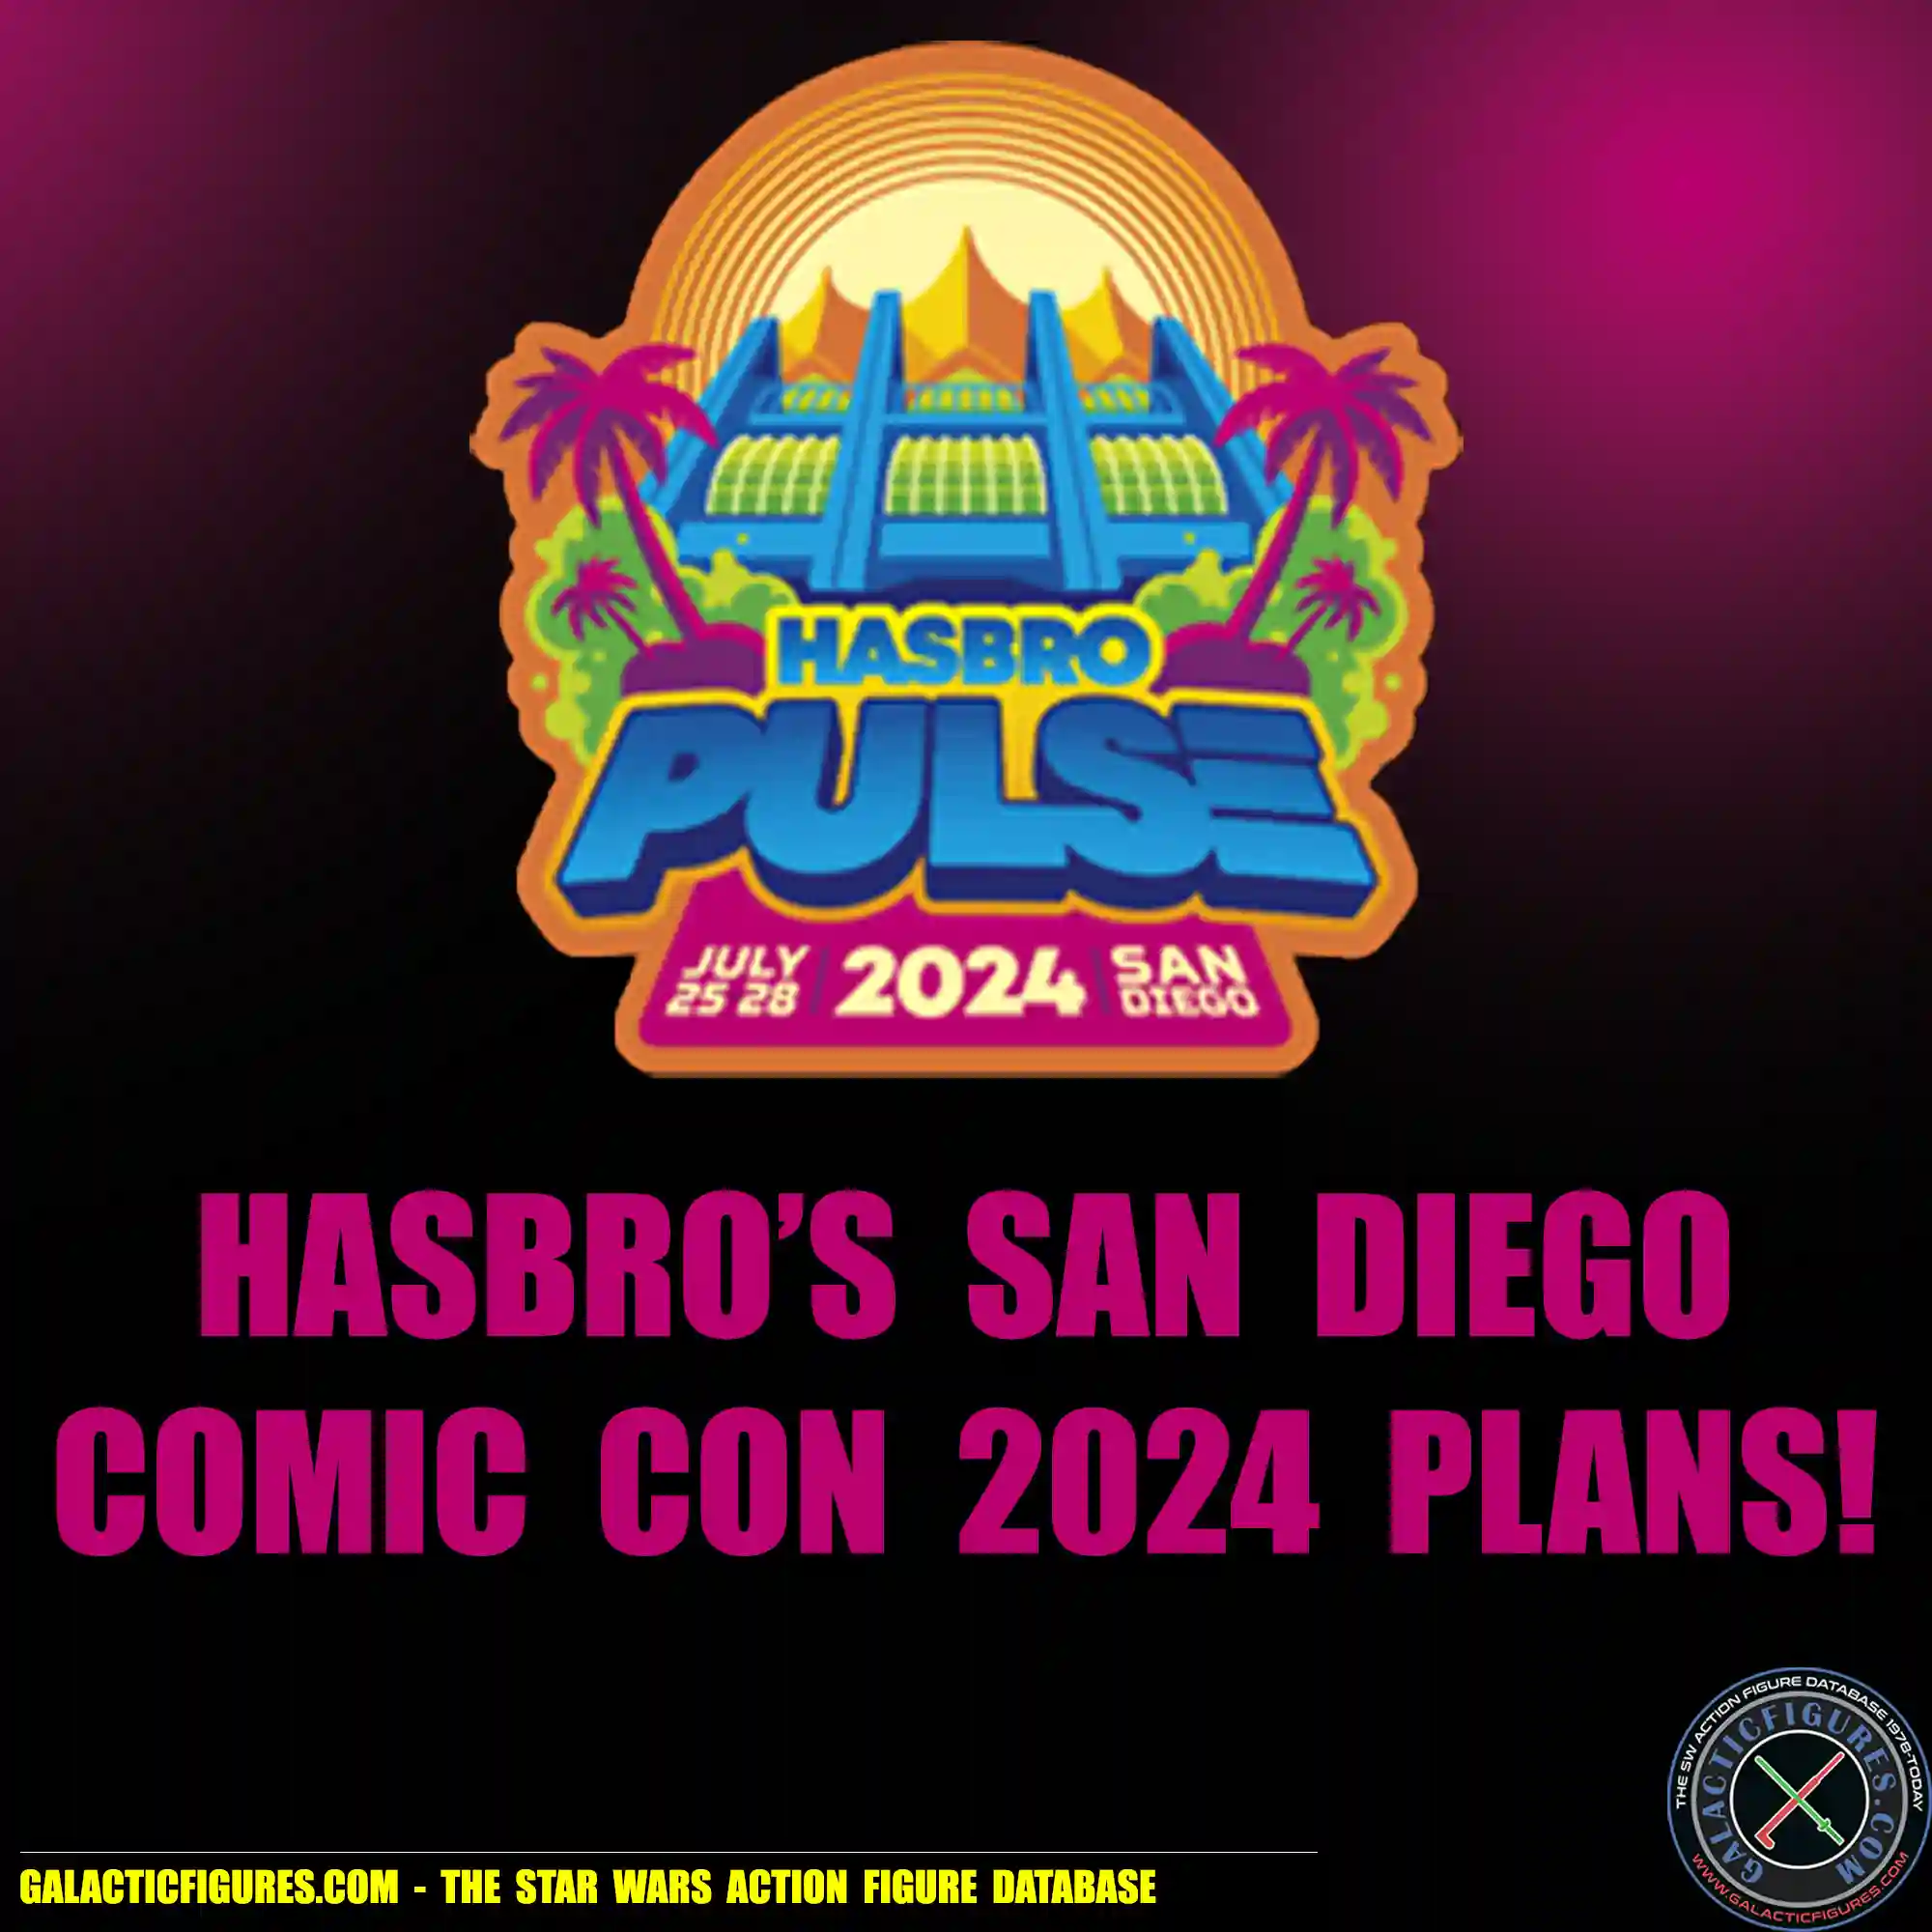 HASBRO'S PLANS FOR SAN DIEGO COMIC CON 2024!